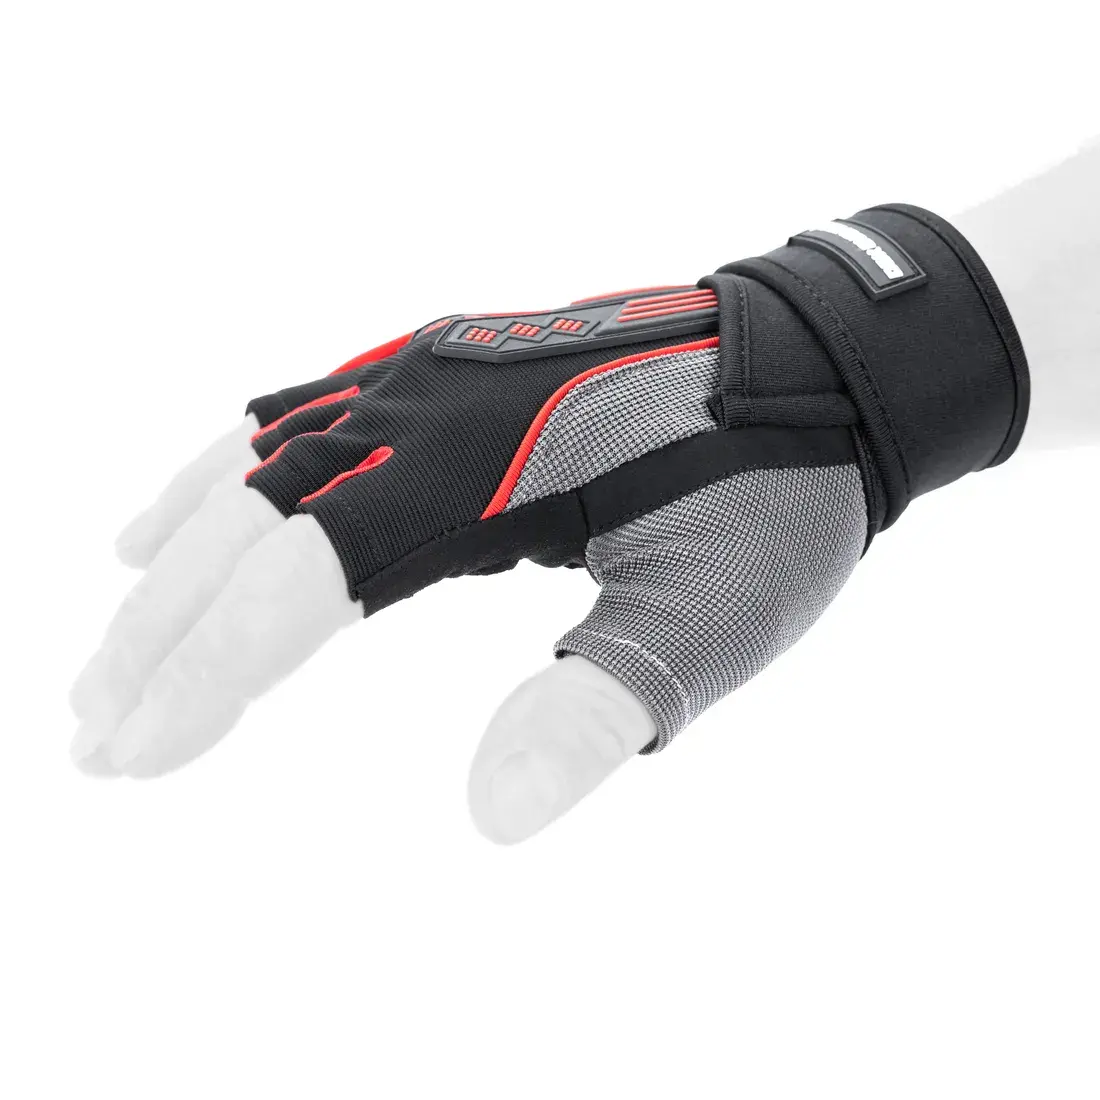 DBX Bushido gloves